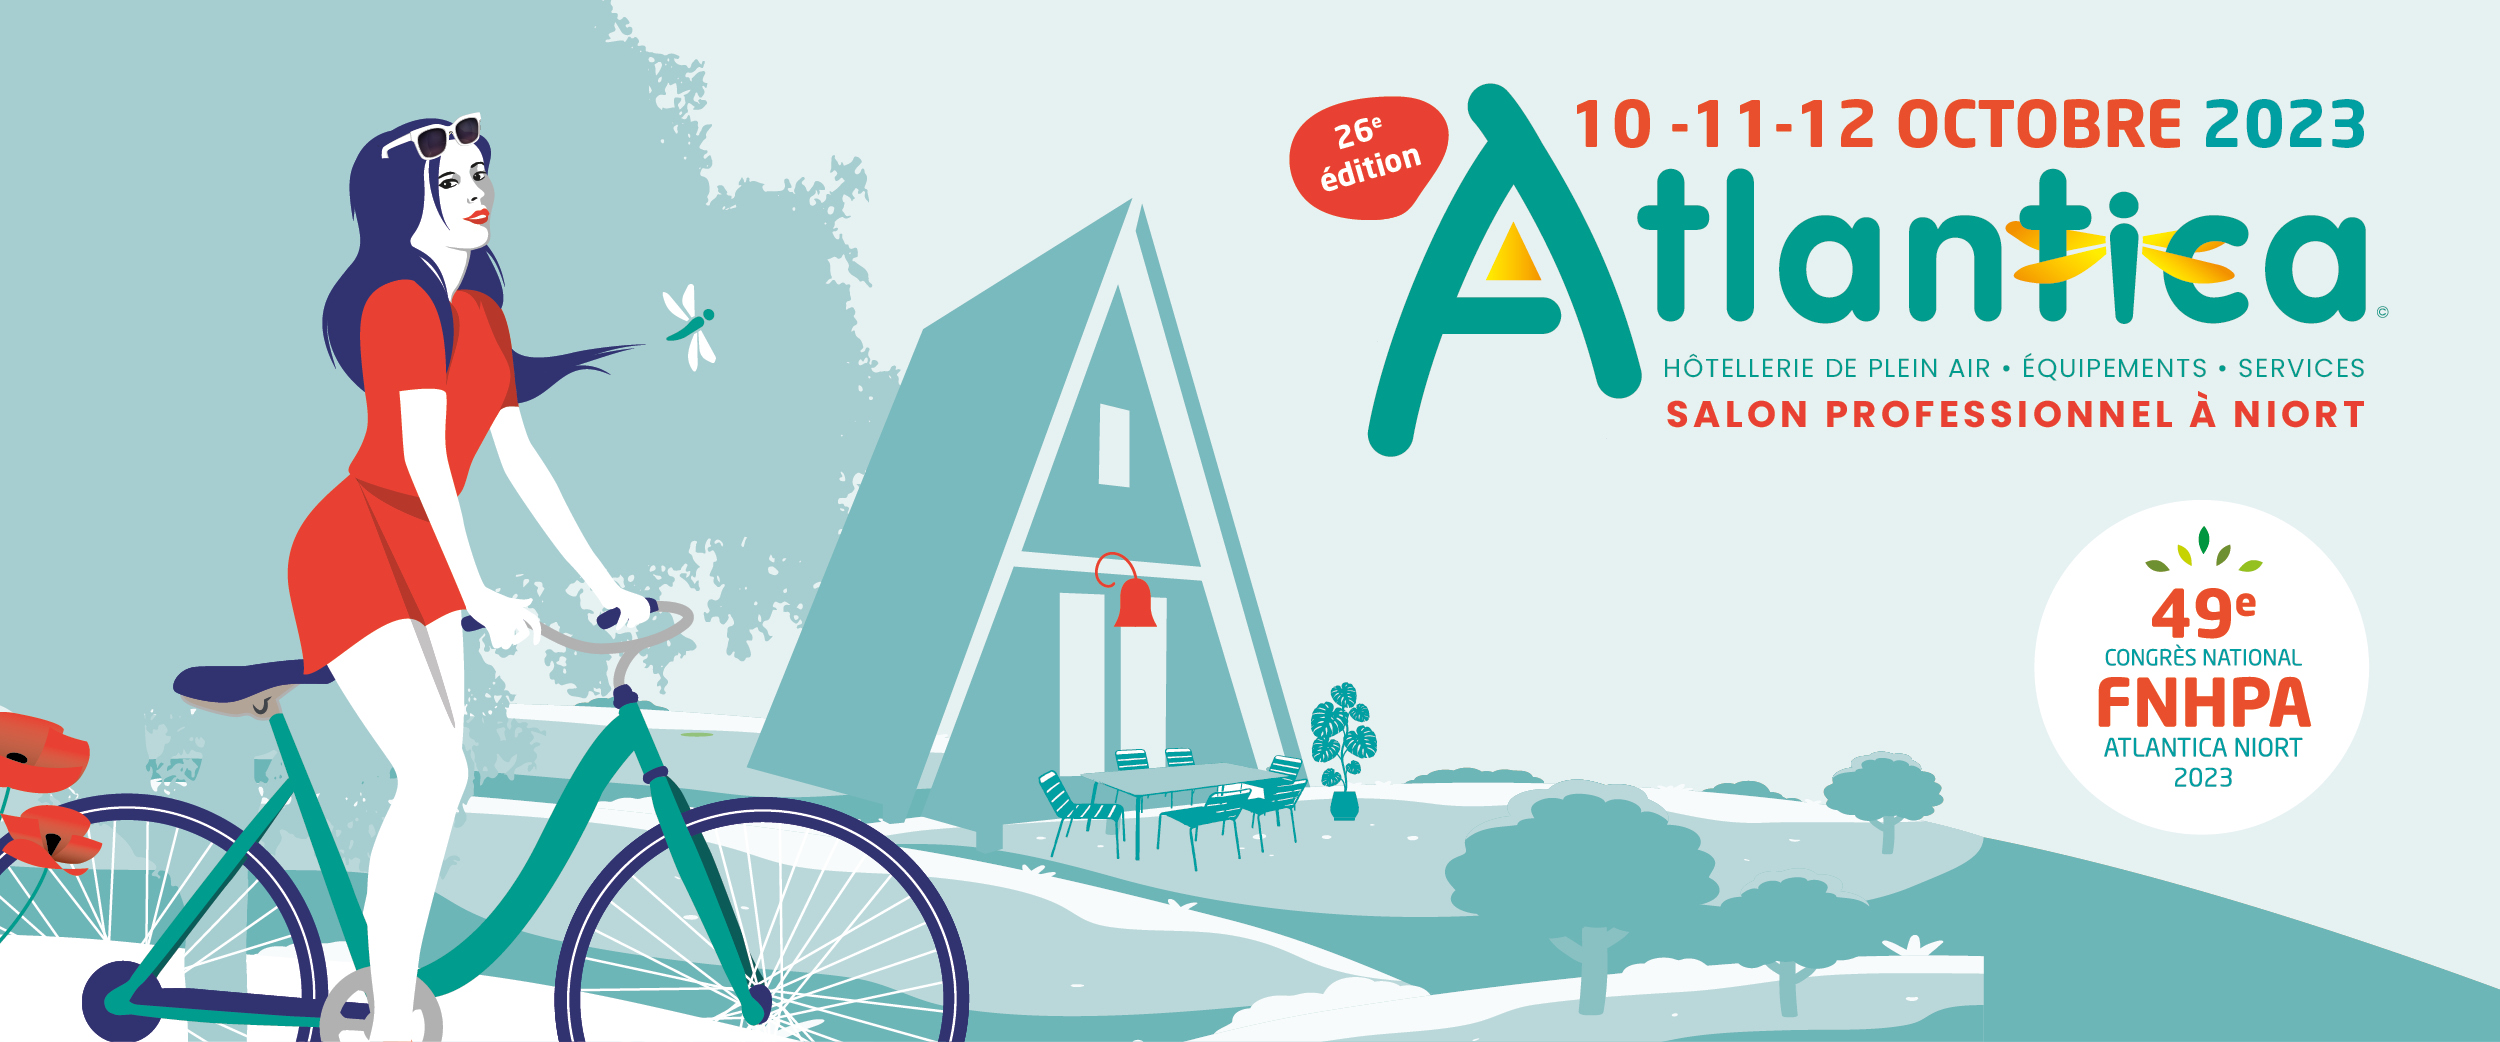 10-11-12/10/23 - Atlantica - Niort - Salon de l'hôtellerie de plein air